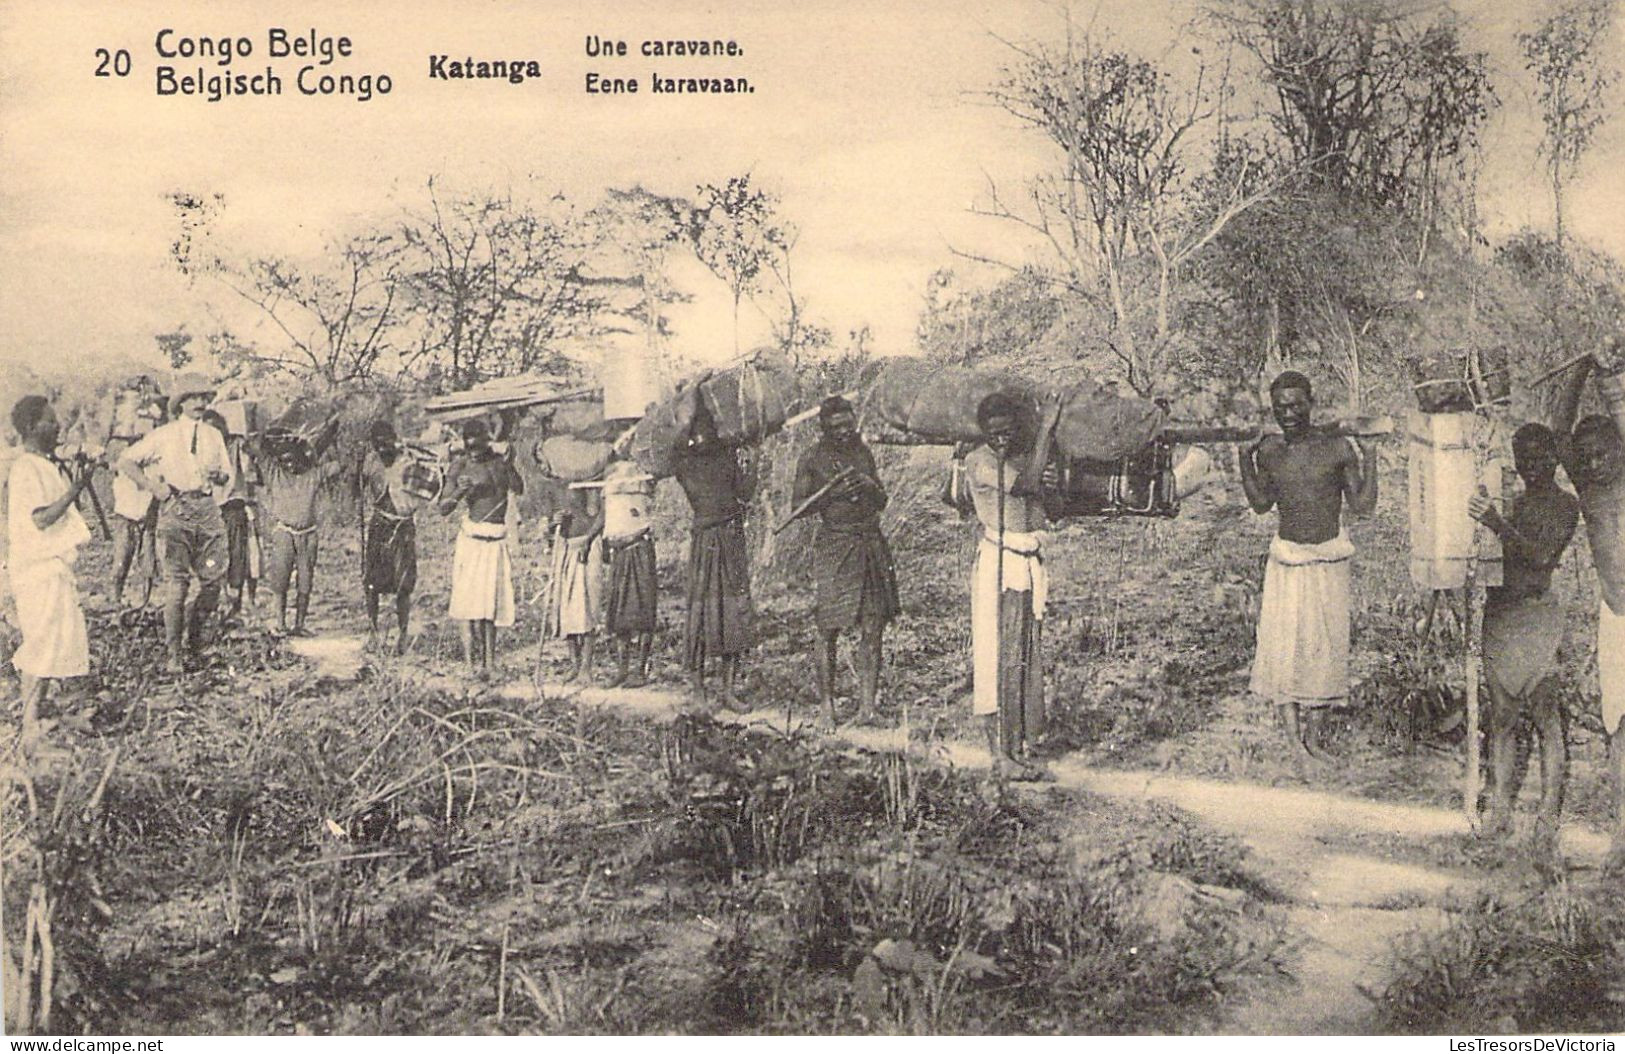 CONGO BELGE - Katanga - Une Caravane - Carte Postale Ancienne - Belgian Congo